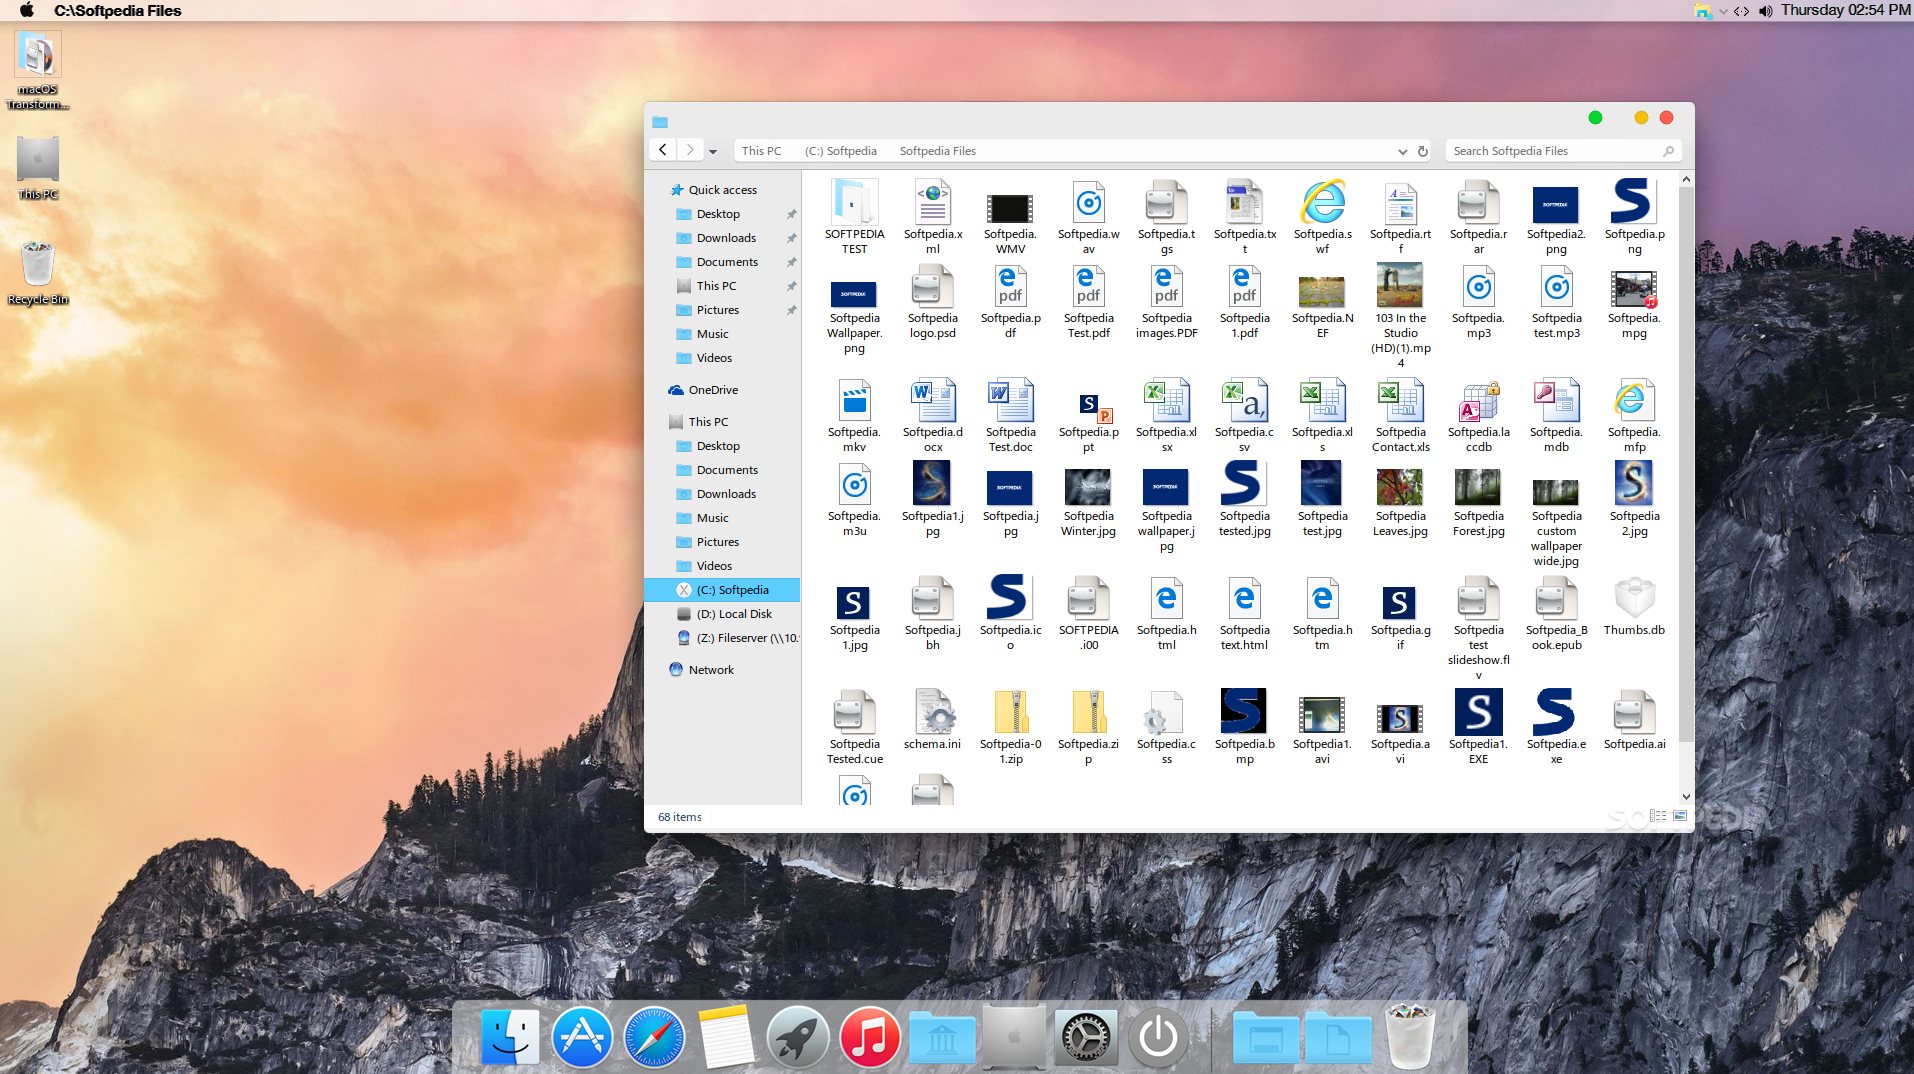 Mac os x lion theme for windows 7 free download